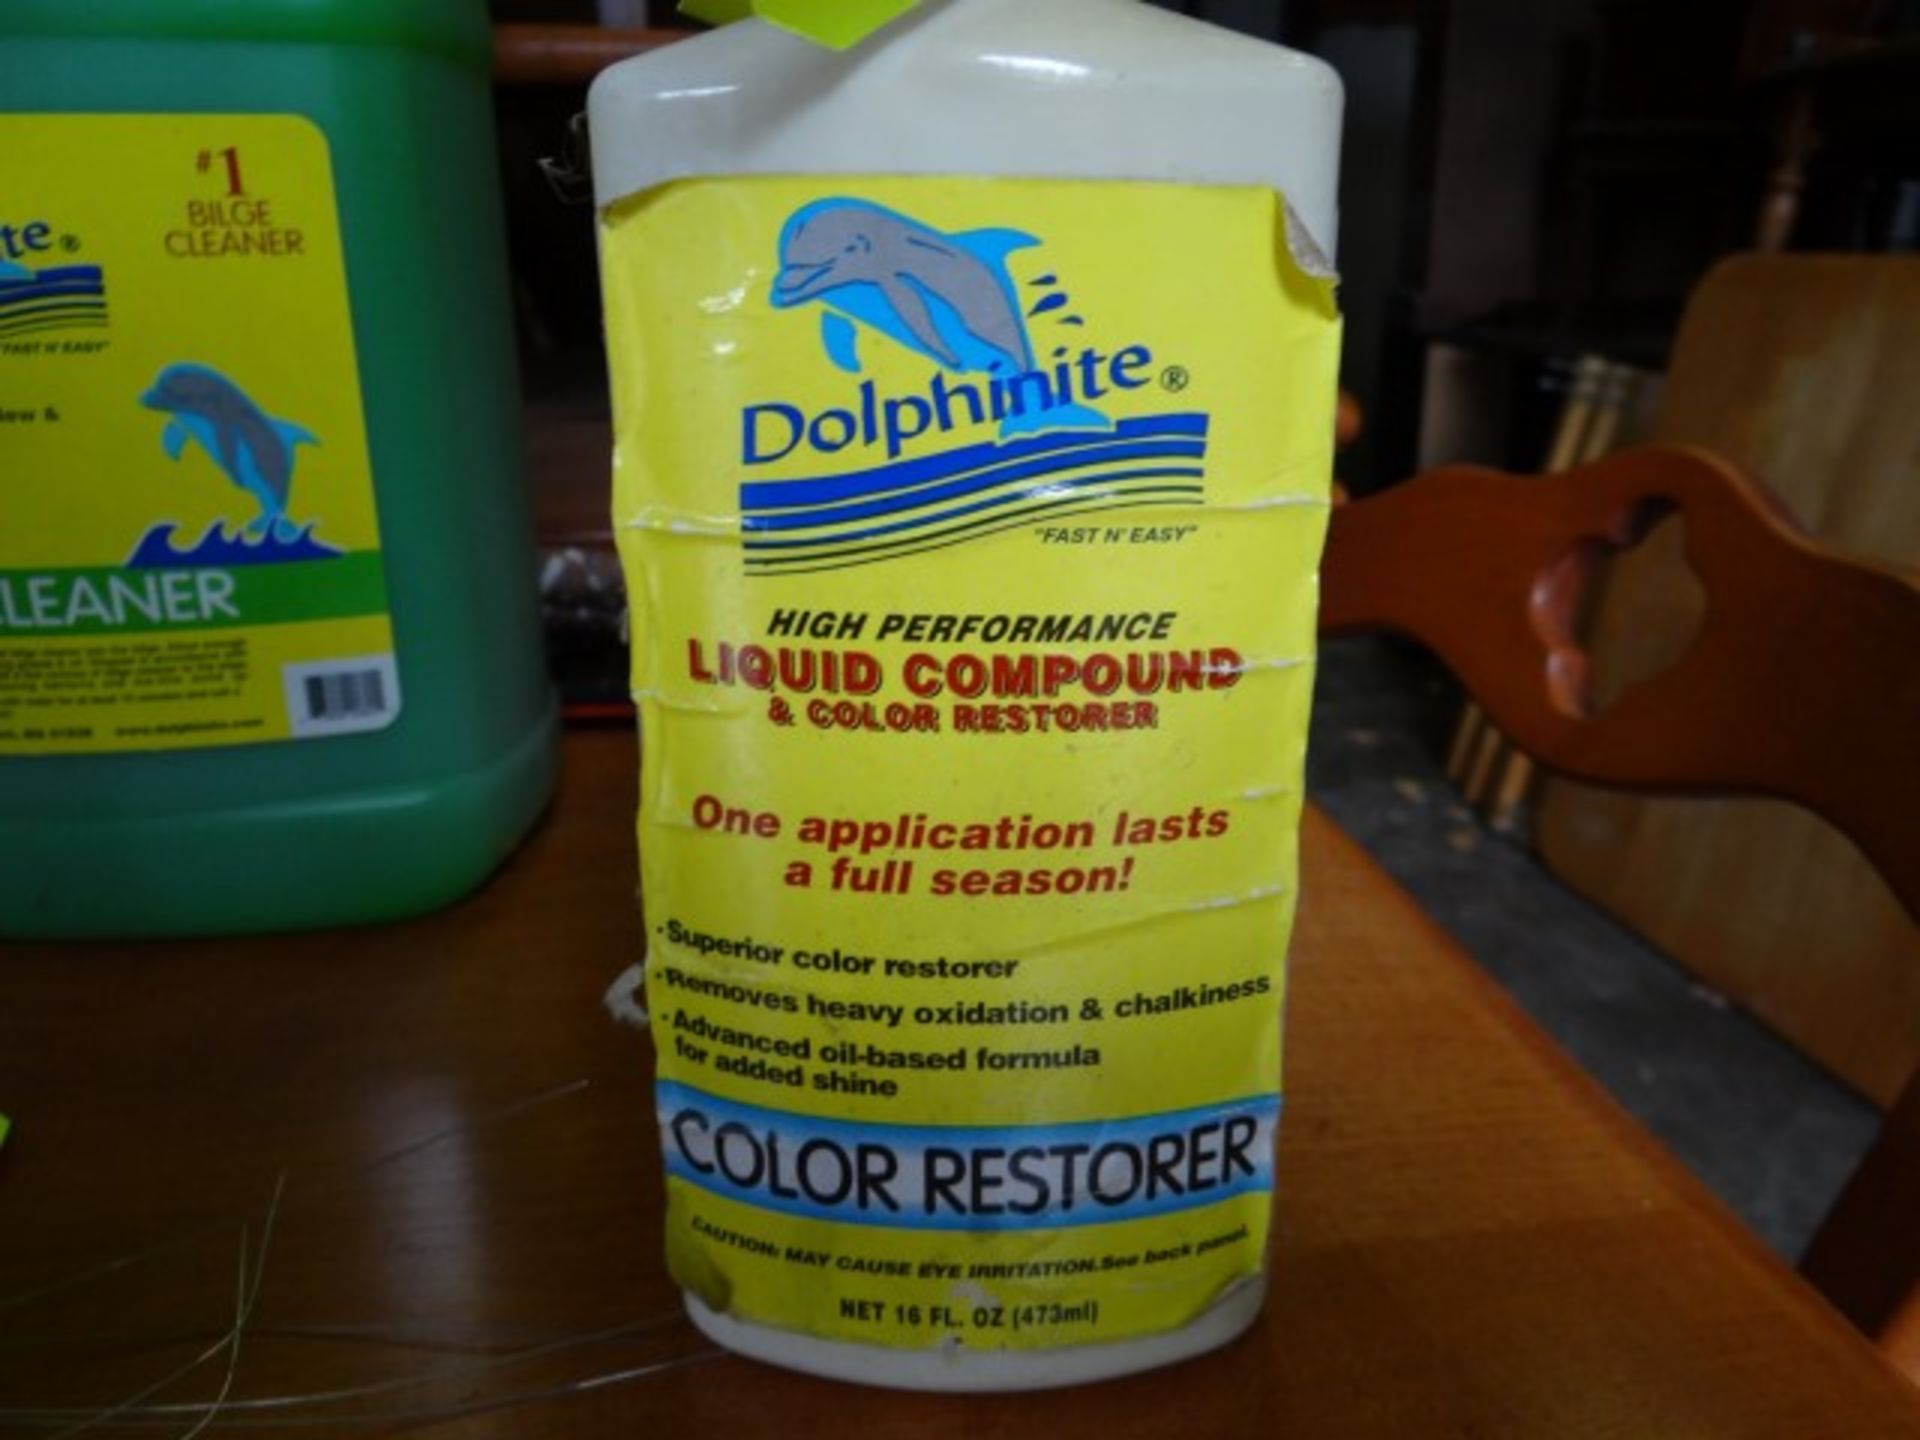 Cases Dolphinite Color Restorer, 12 per case, 12 oz bottles